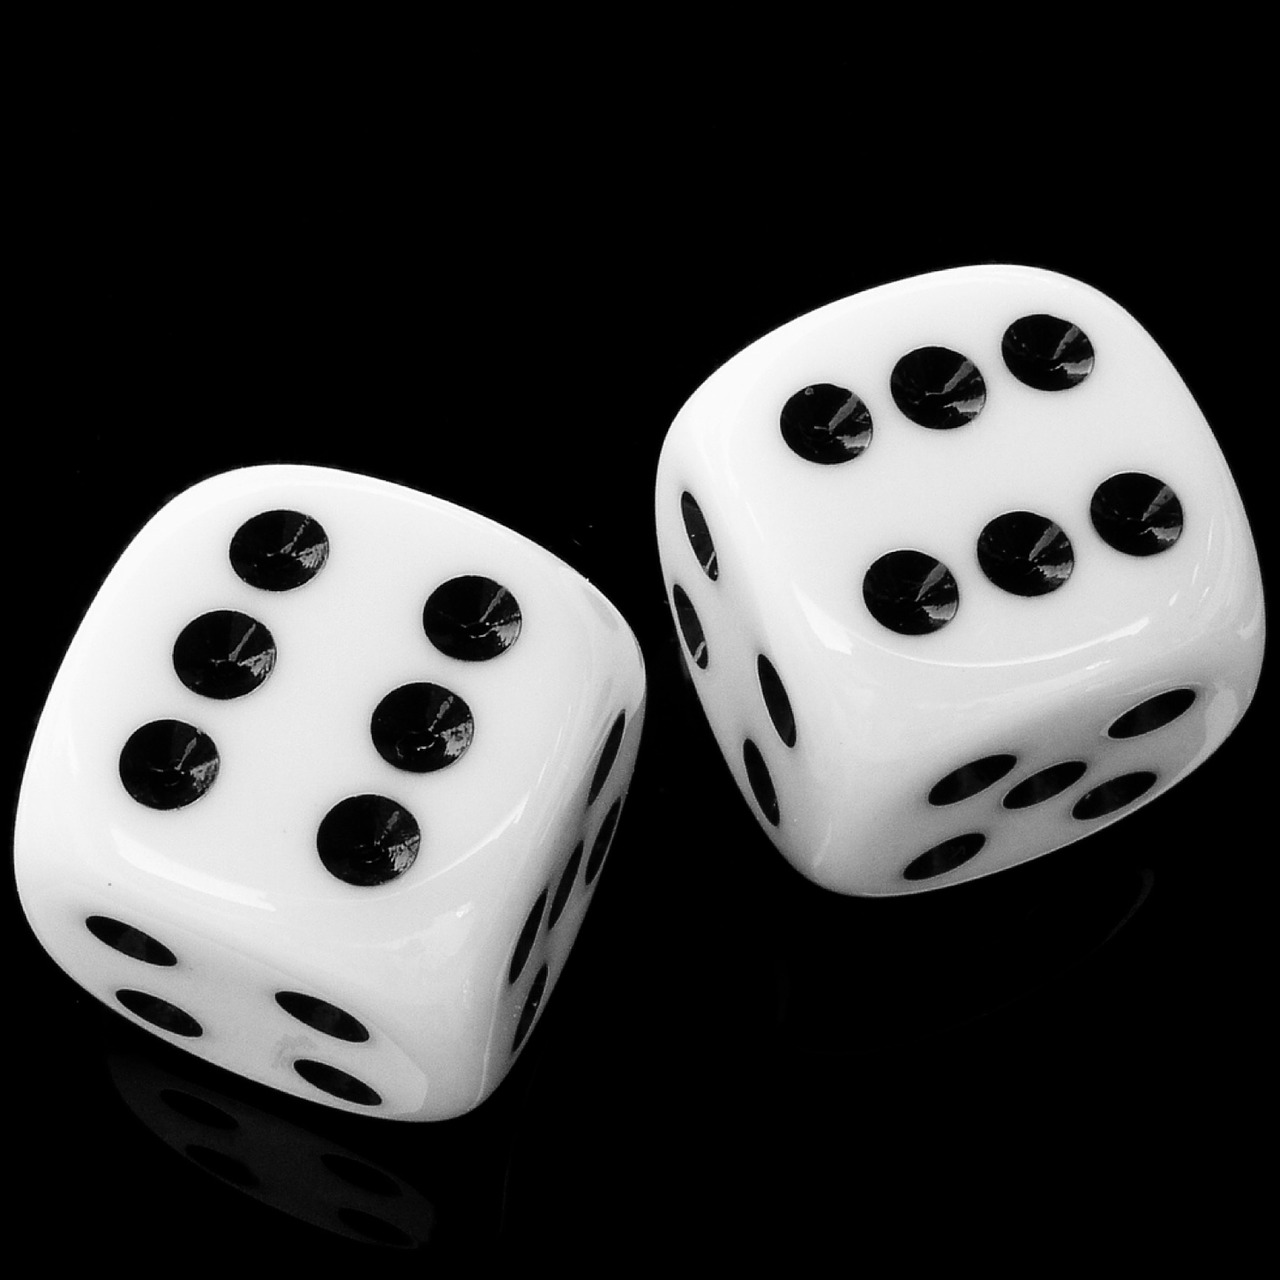 dice gambling chance free photo